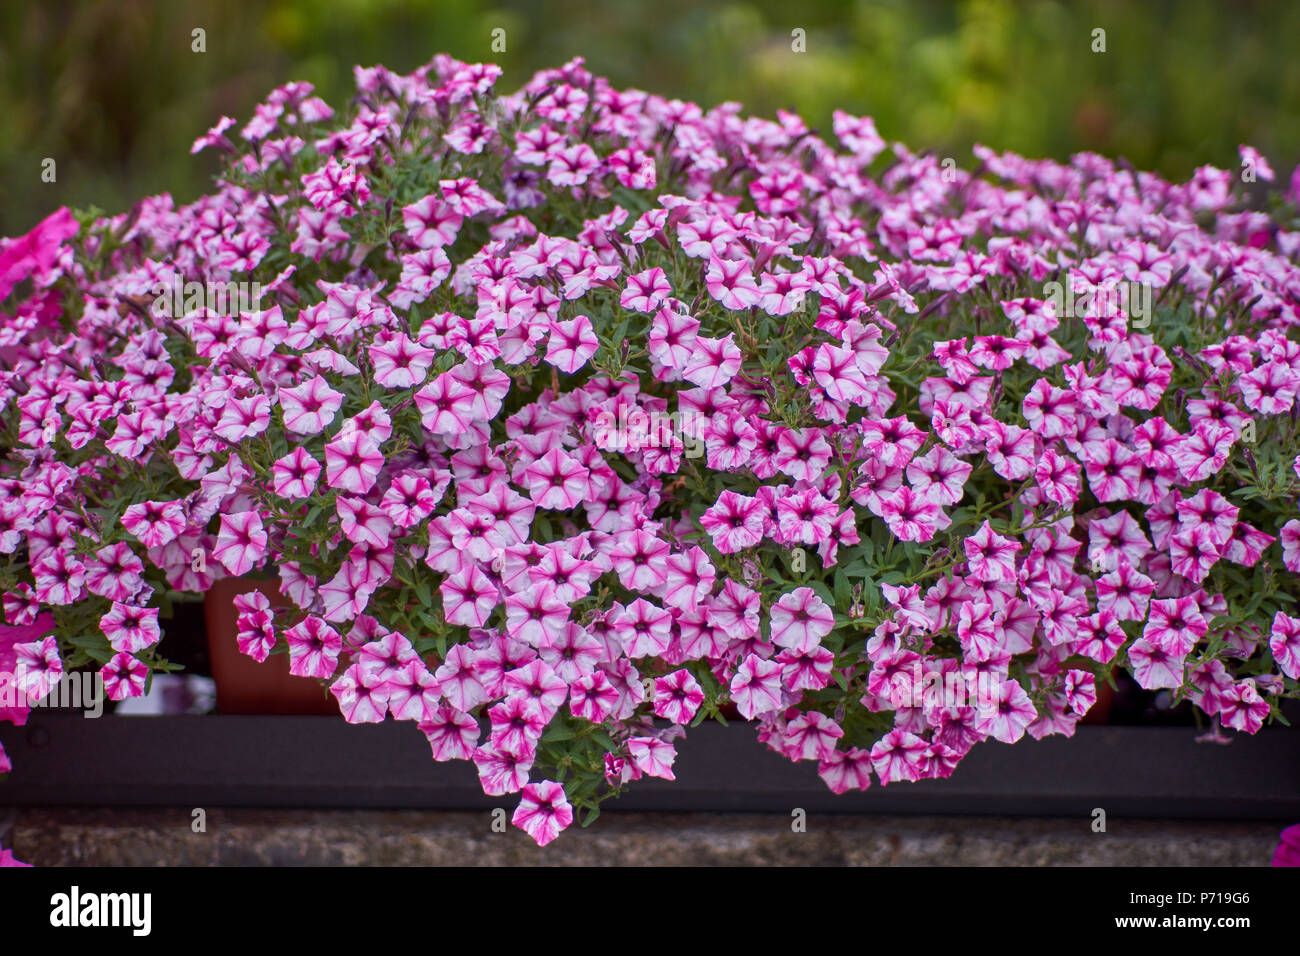 Lots of lush, abundantly flowering, colorful petunias colorful petunias galore Stock Photo